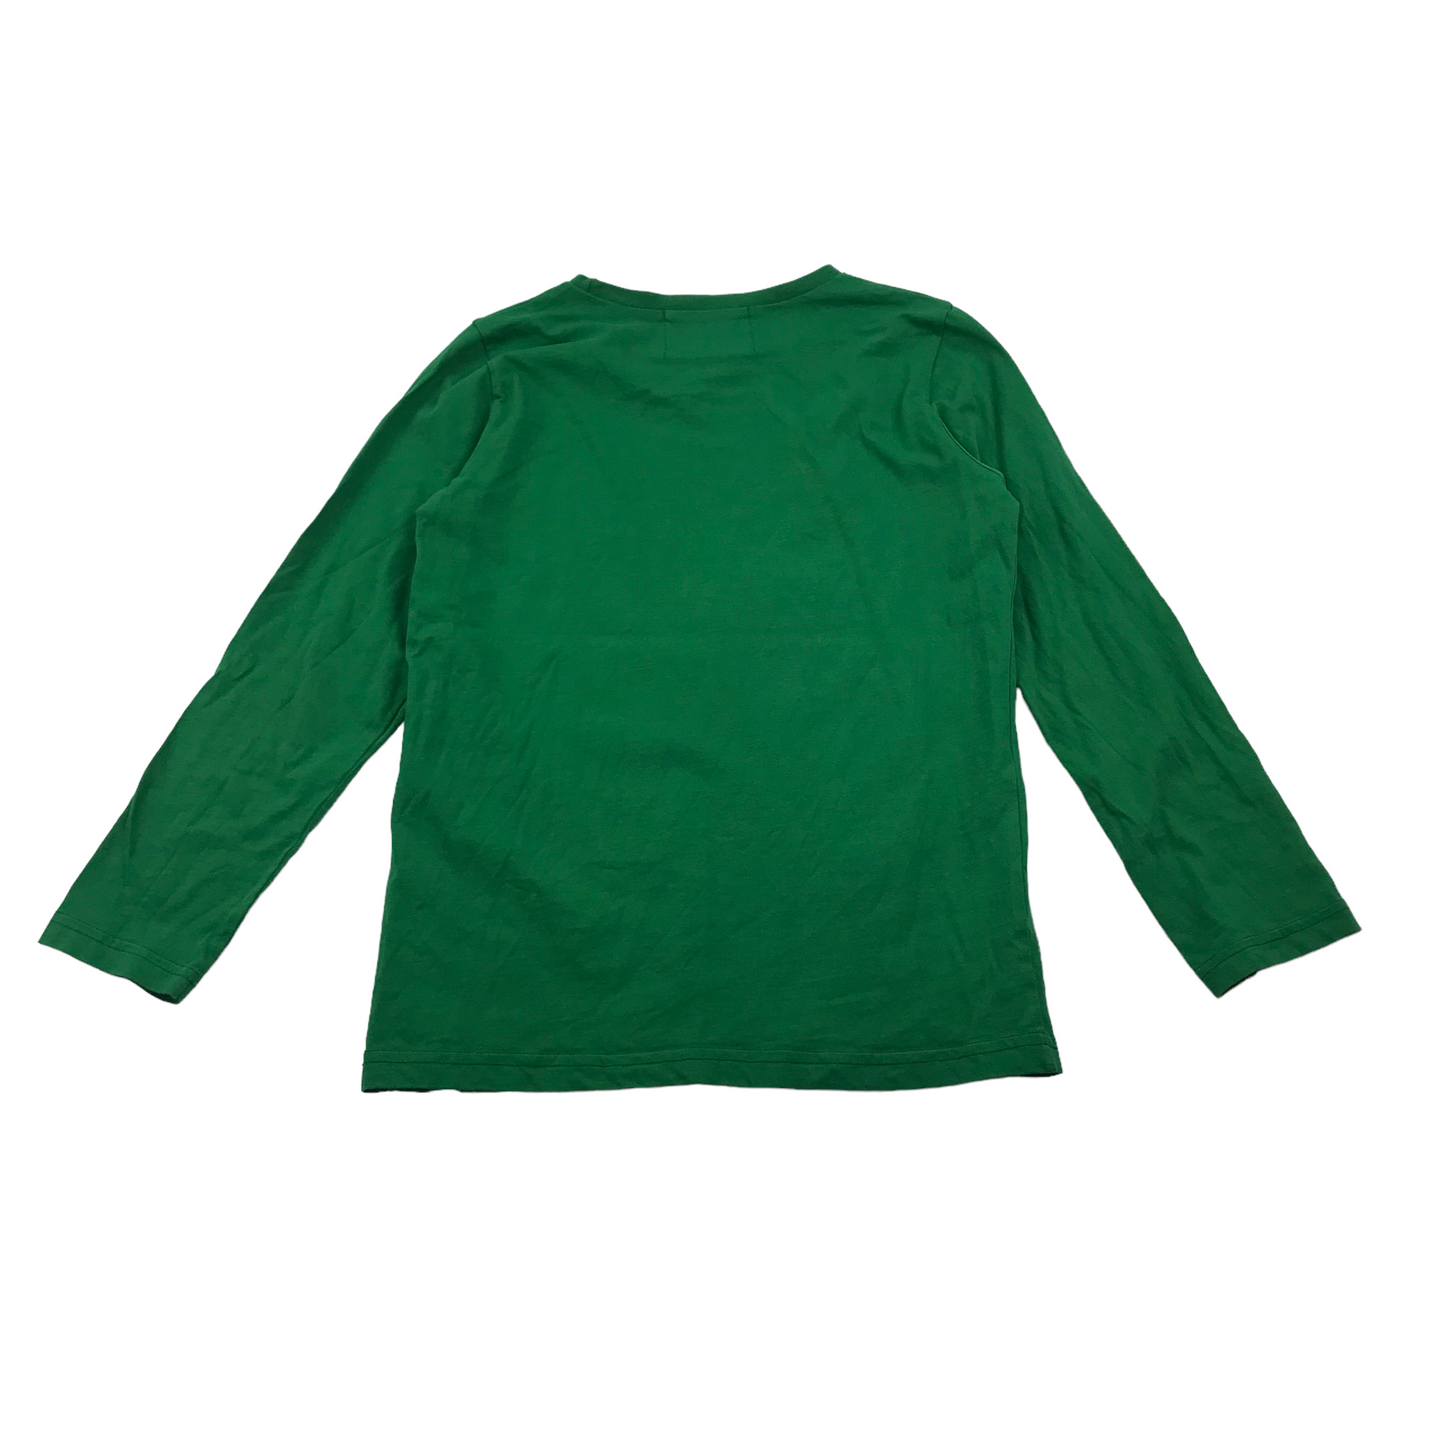 Celtic Green 88 Long Sleeve T-shirt Age 10